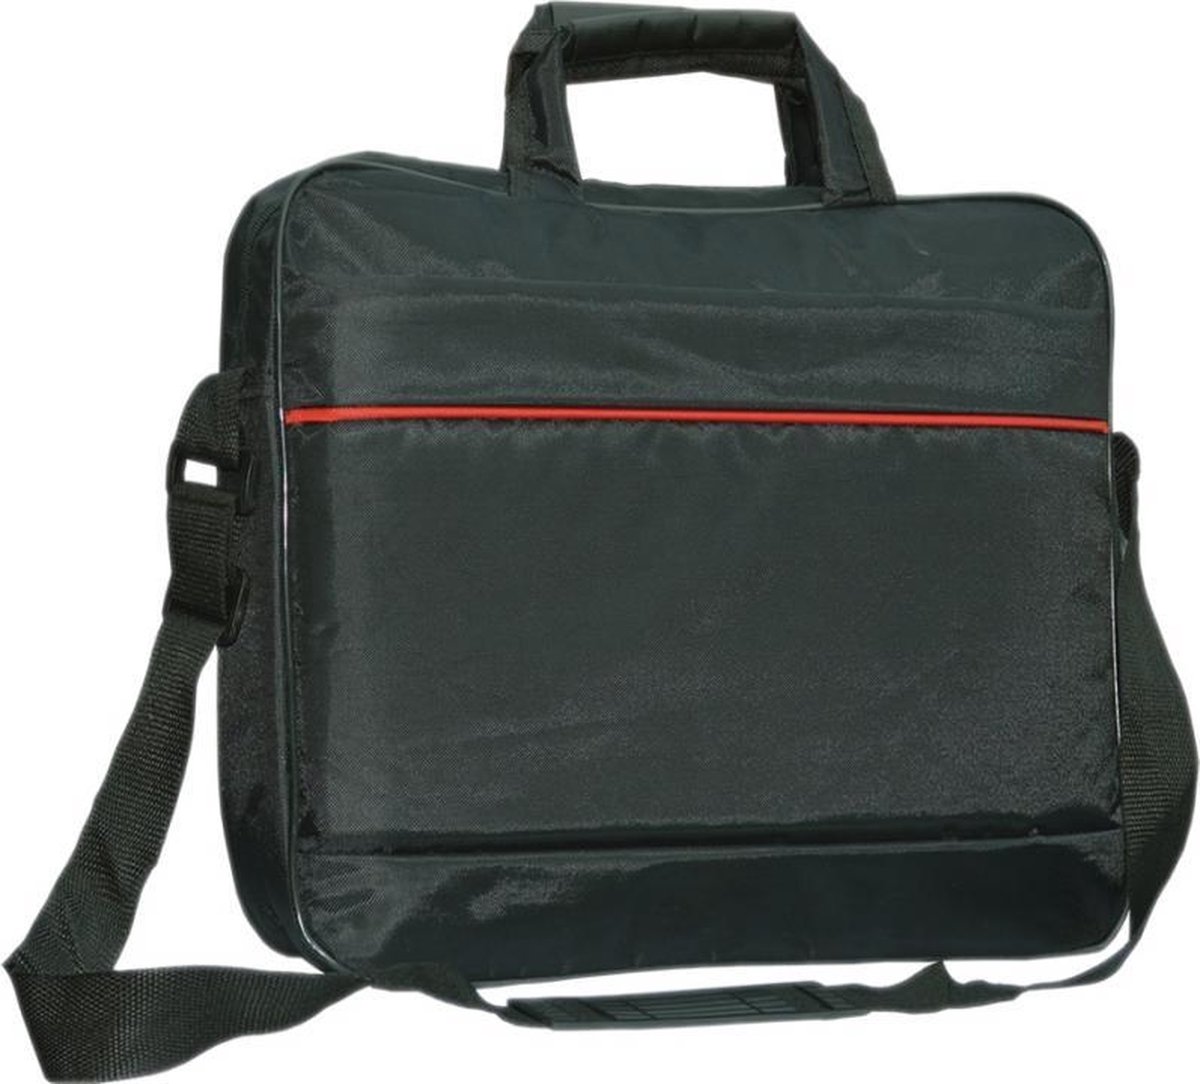 Lenovo Ideapad Yoga 13 laptoptas messenger bag / schoudertas / tas , zwart , merk i12Cover